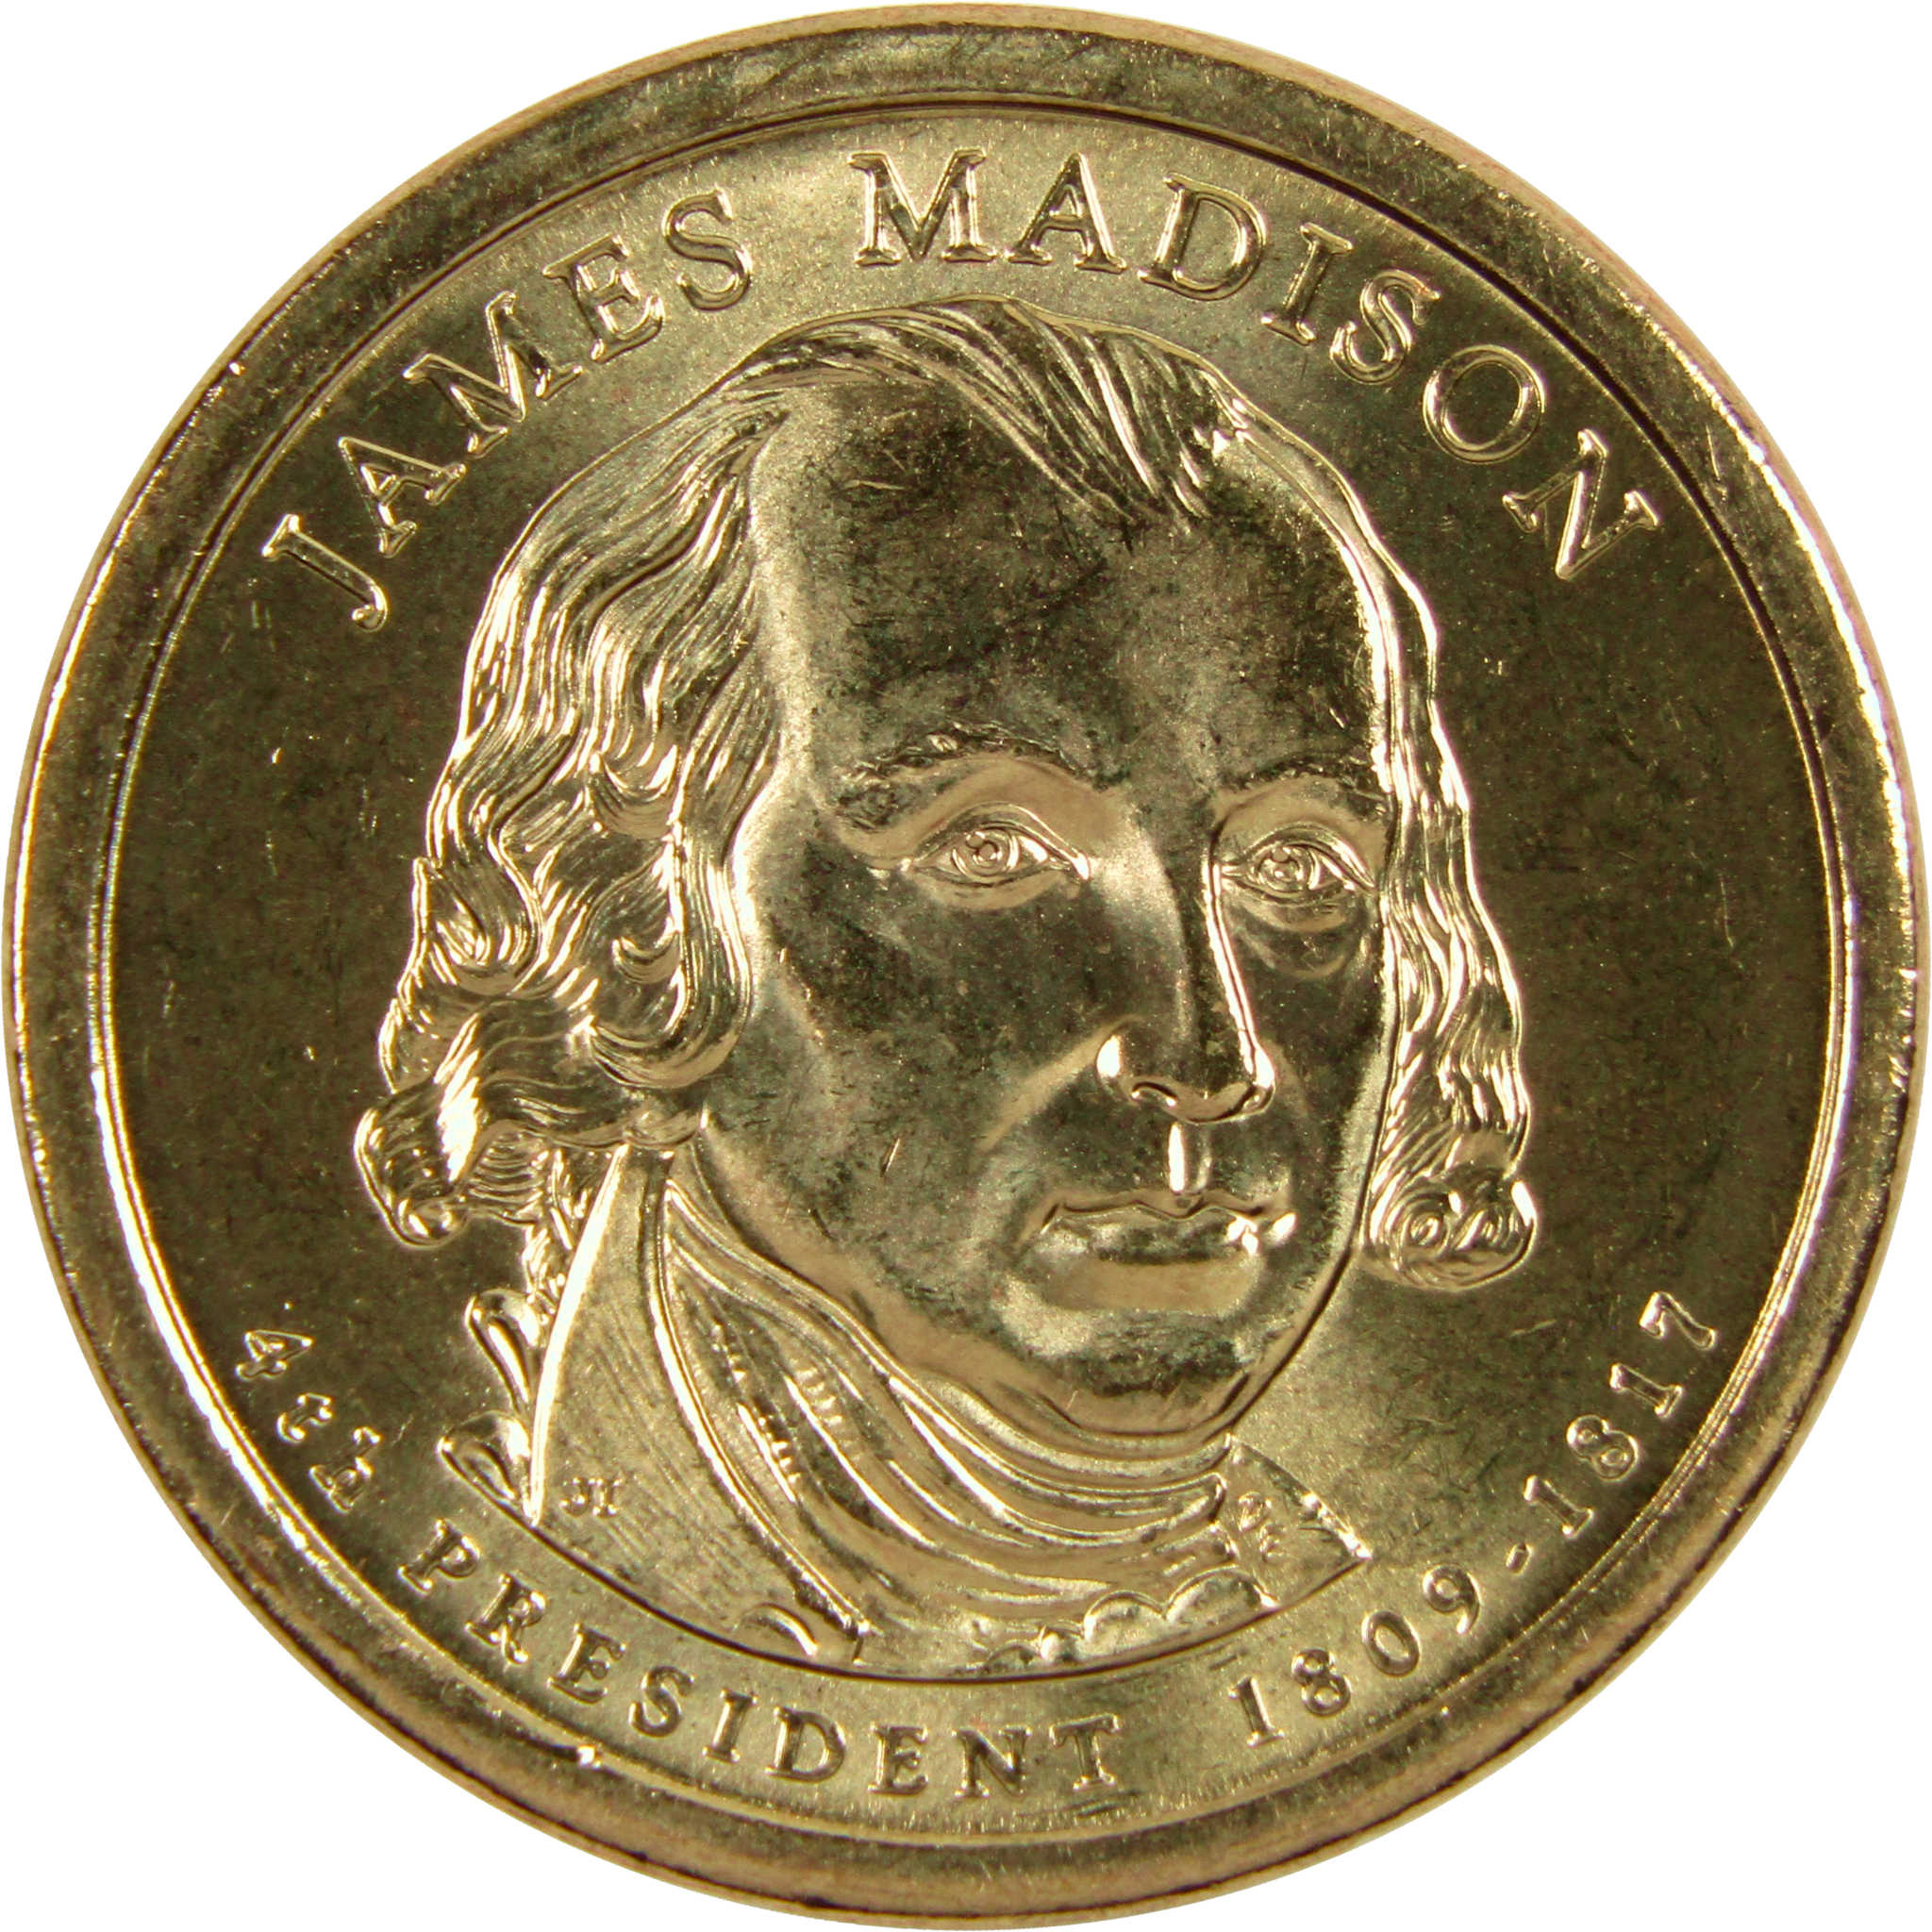 2007 D James Madison Presidential Dollar BU Uncirculated $1 Coin